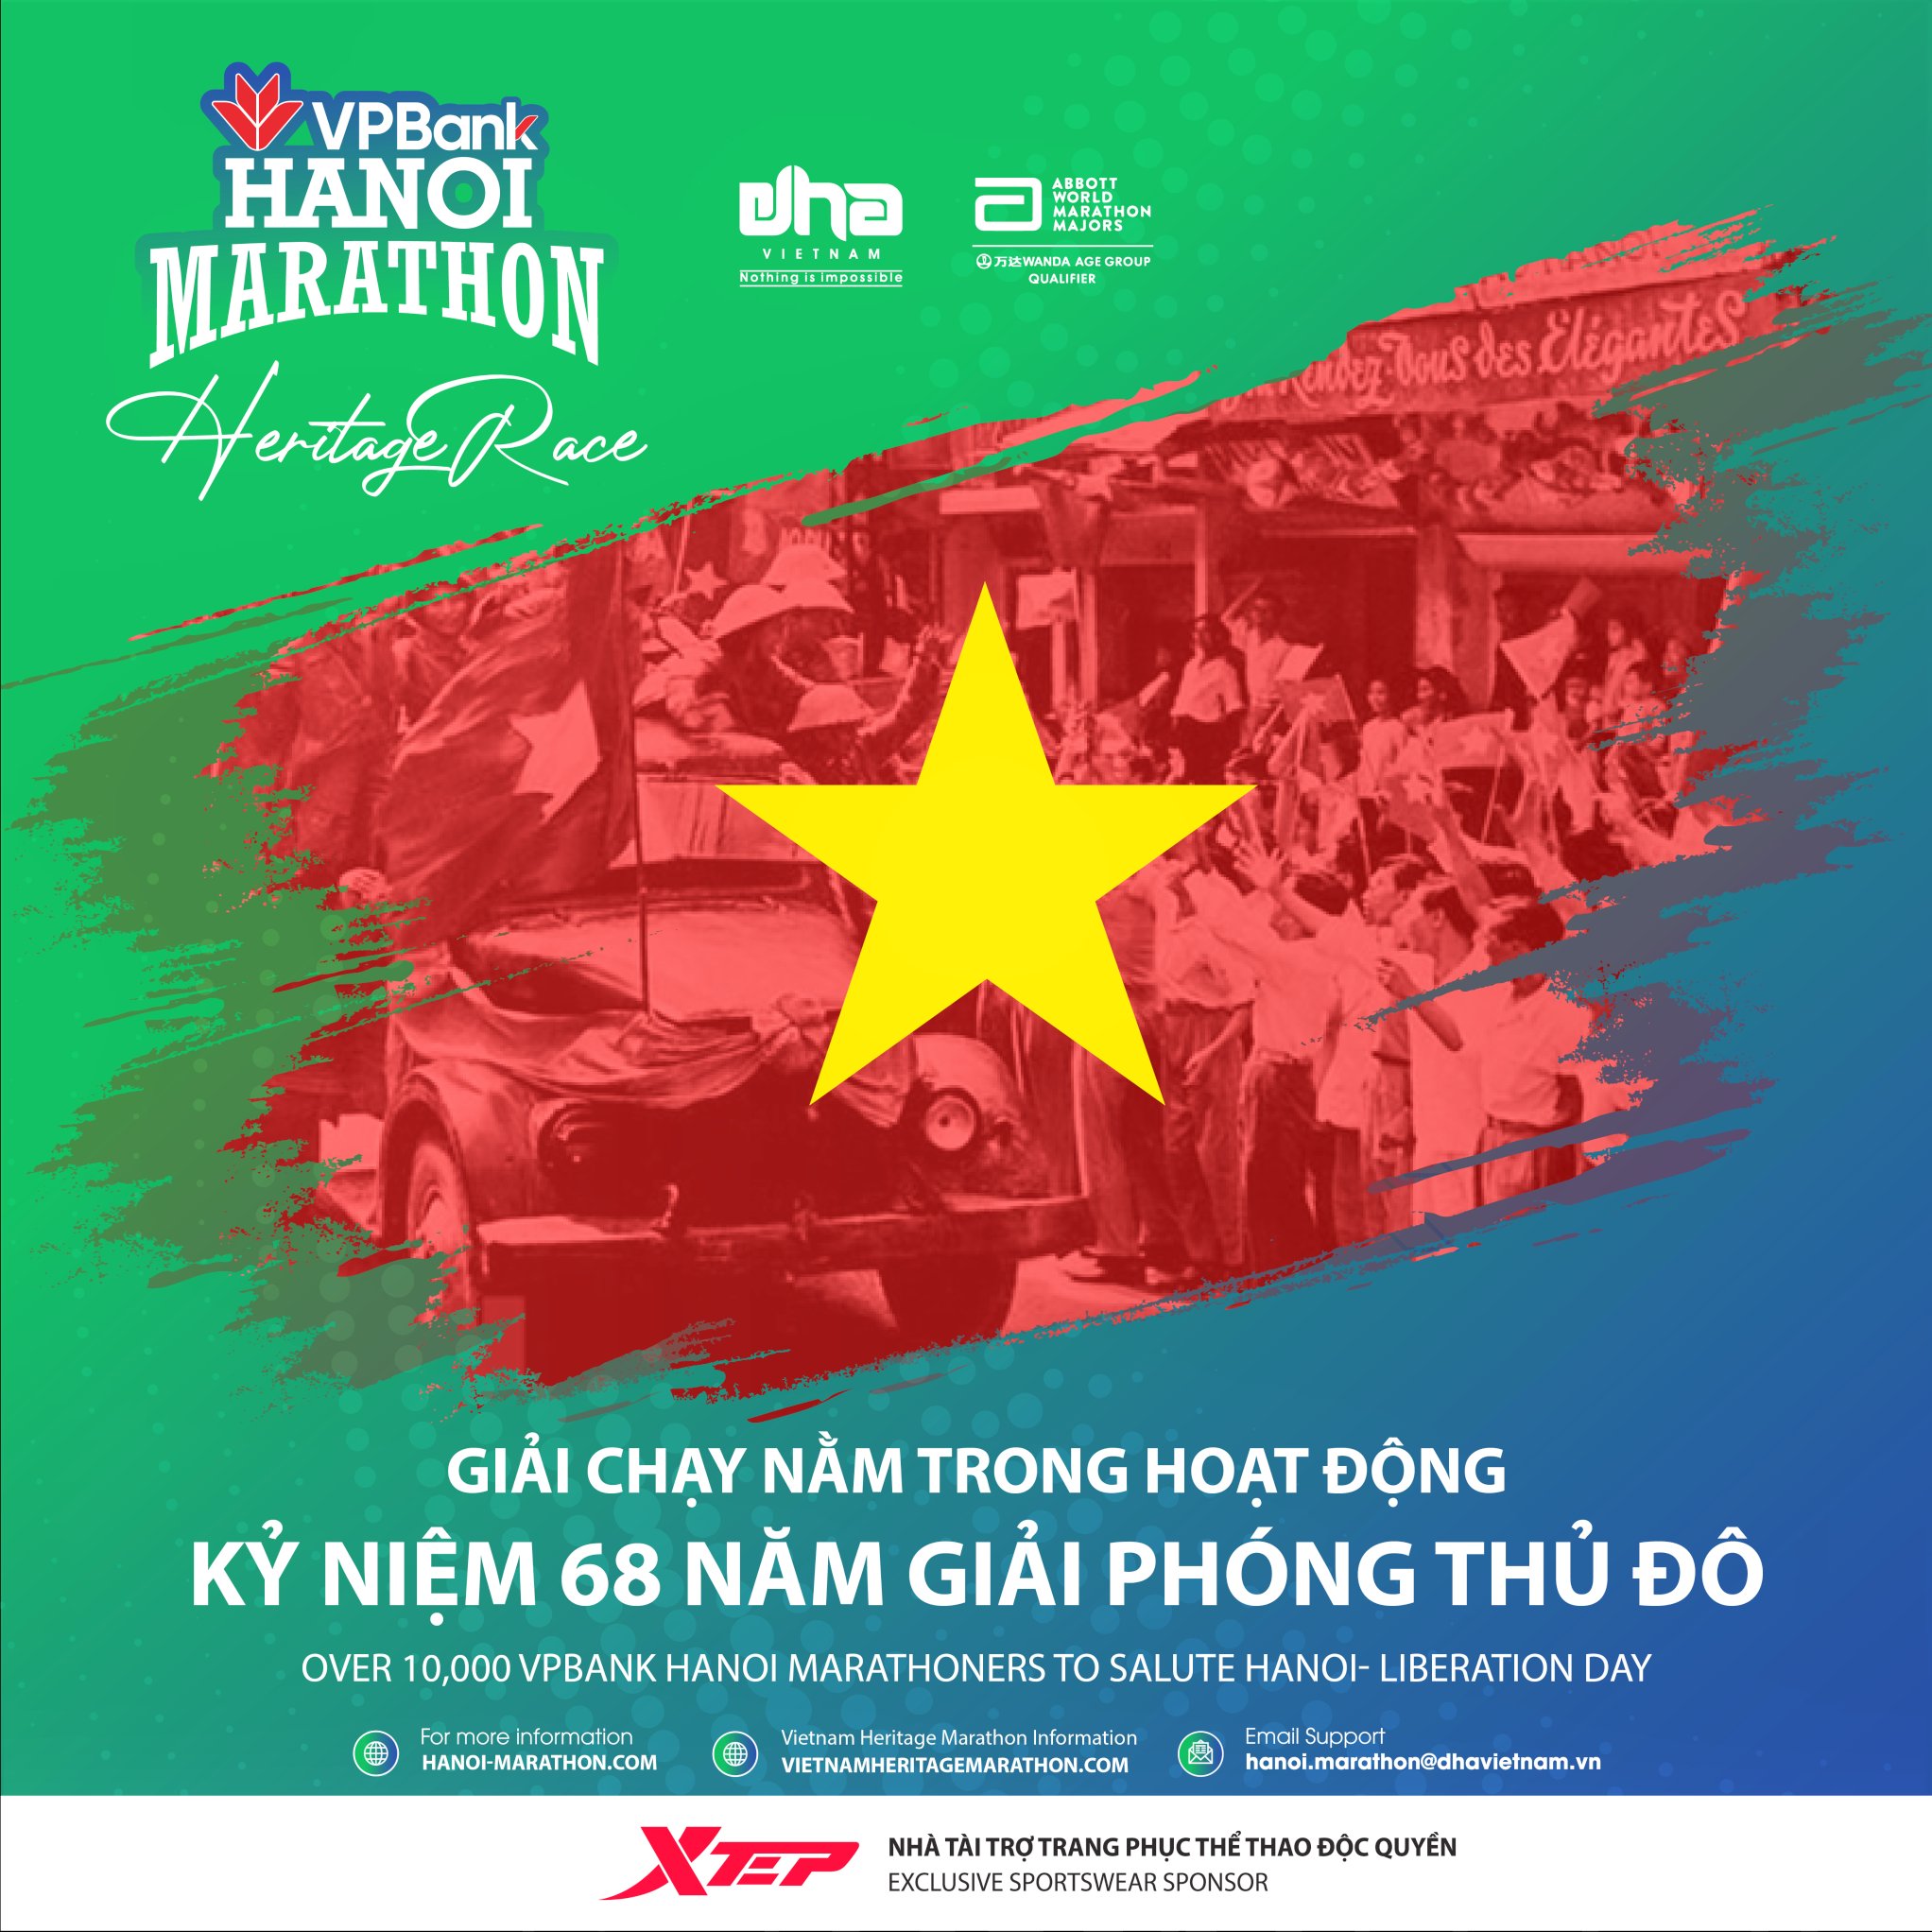 VPBank Hanoi Marathon 2022: Final Results